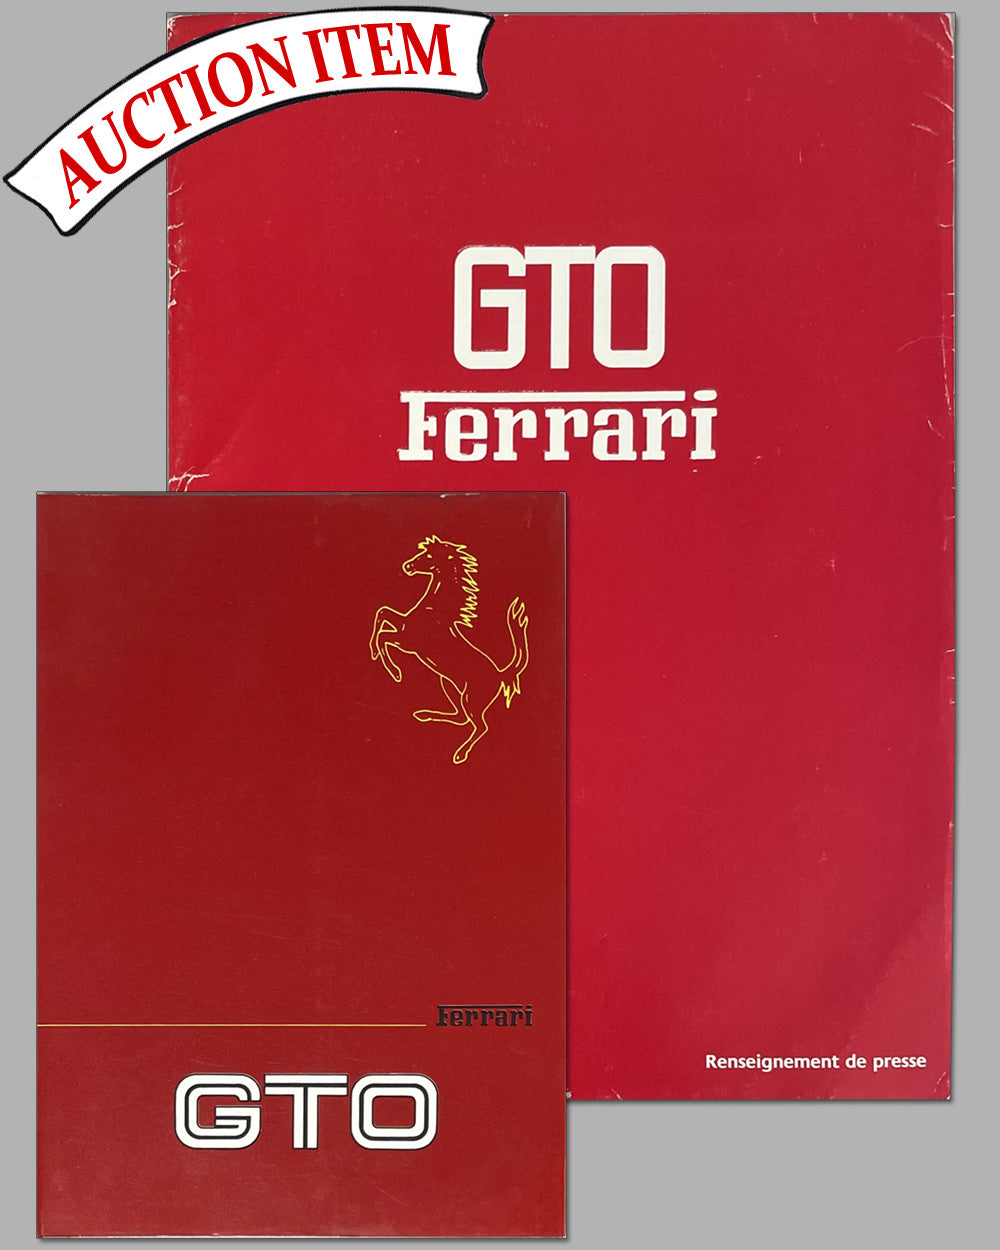 Two Ferrari 288 GTO factory publications